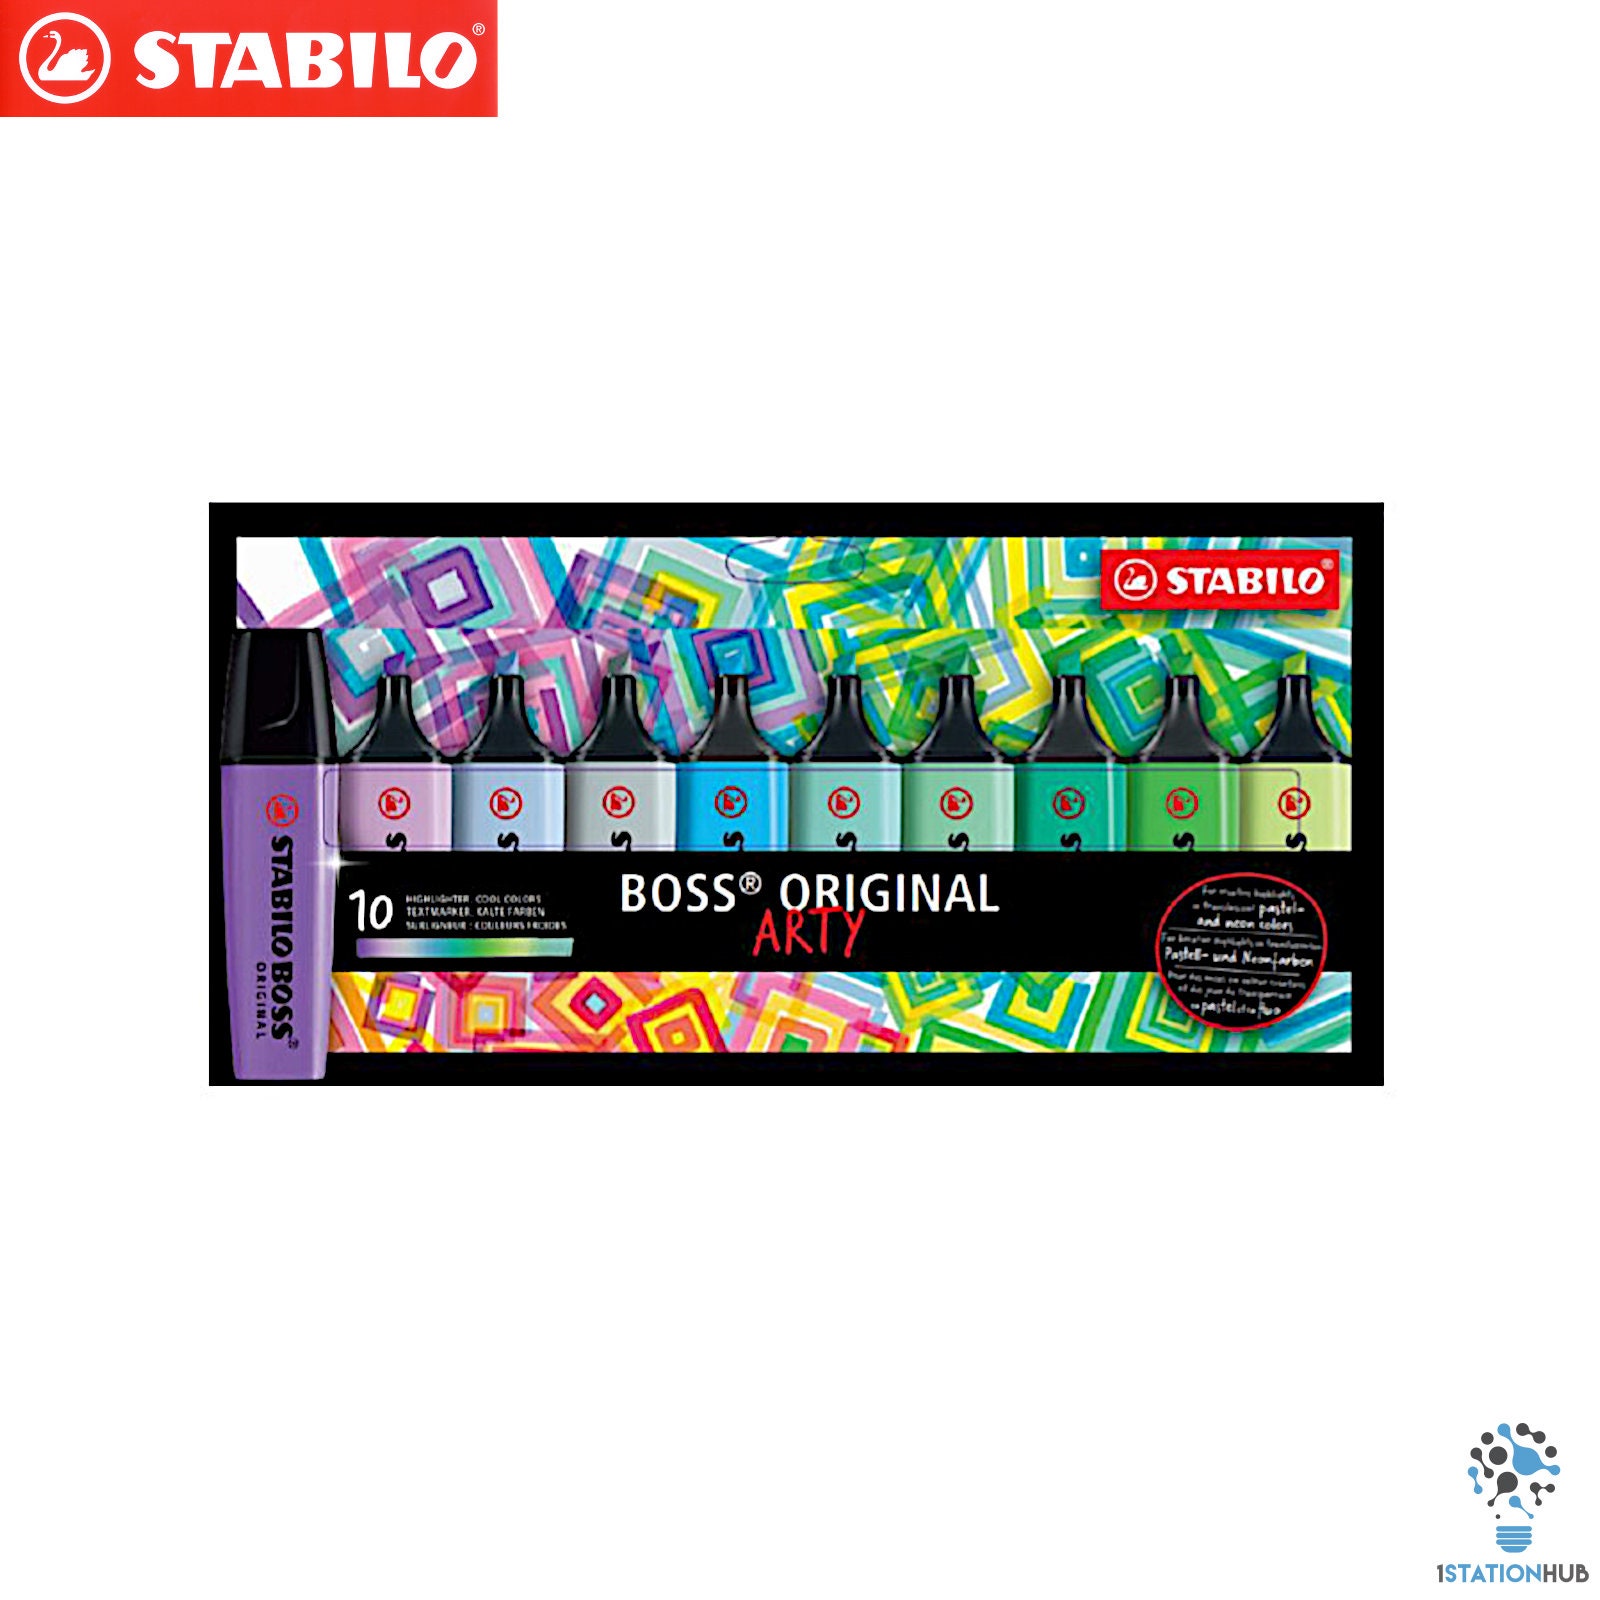 Surligneur Stabilo Boss couleurs assorties - Set de 15